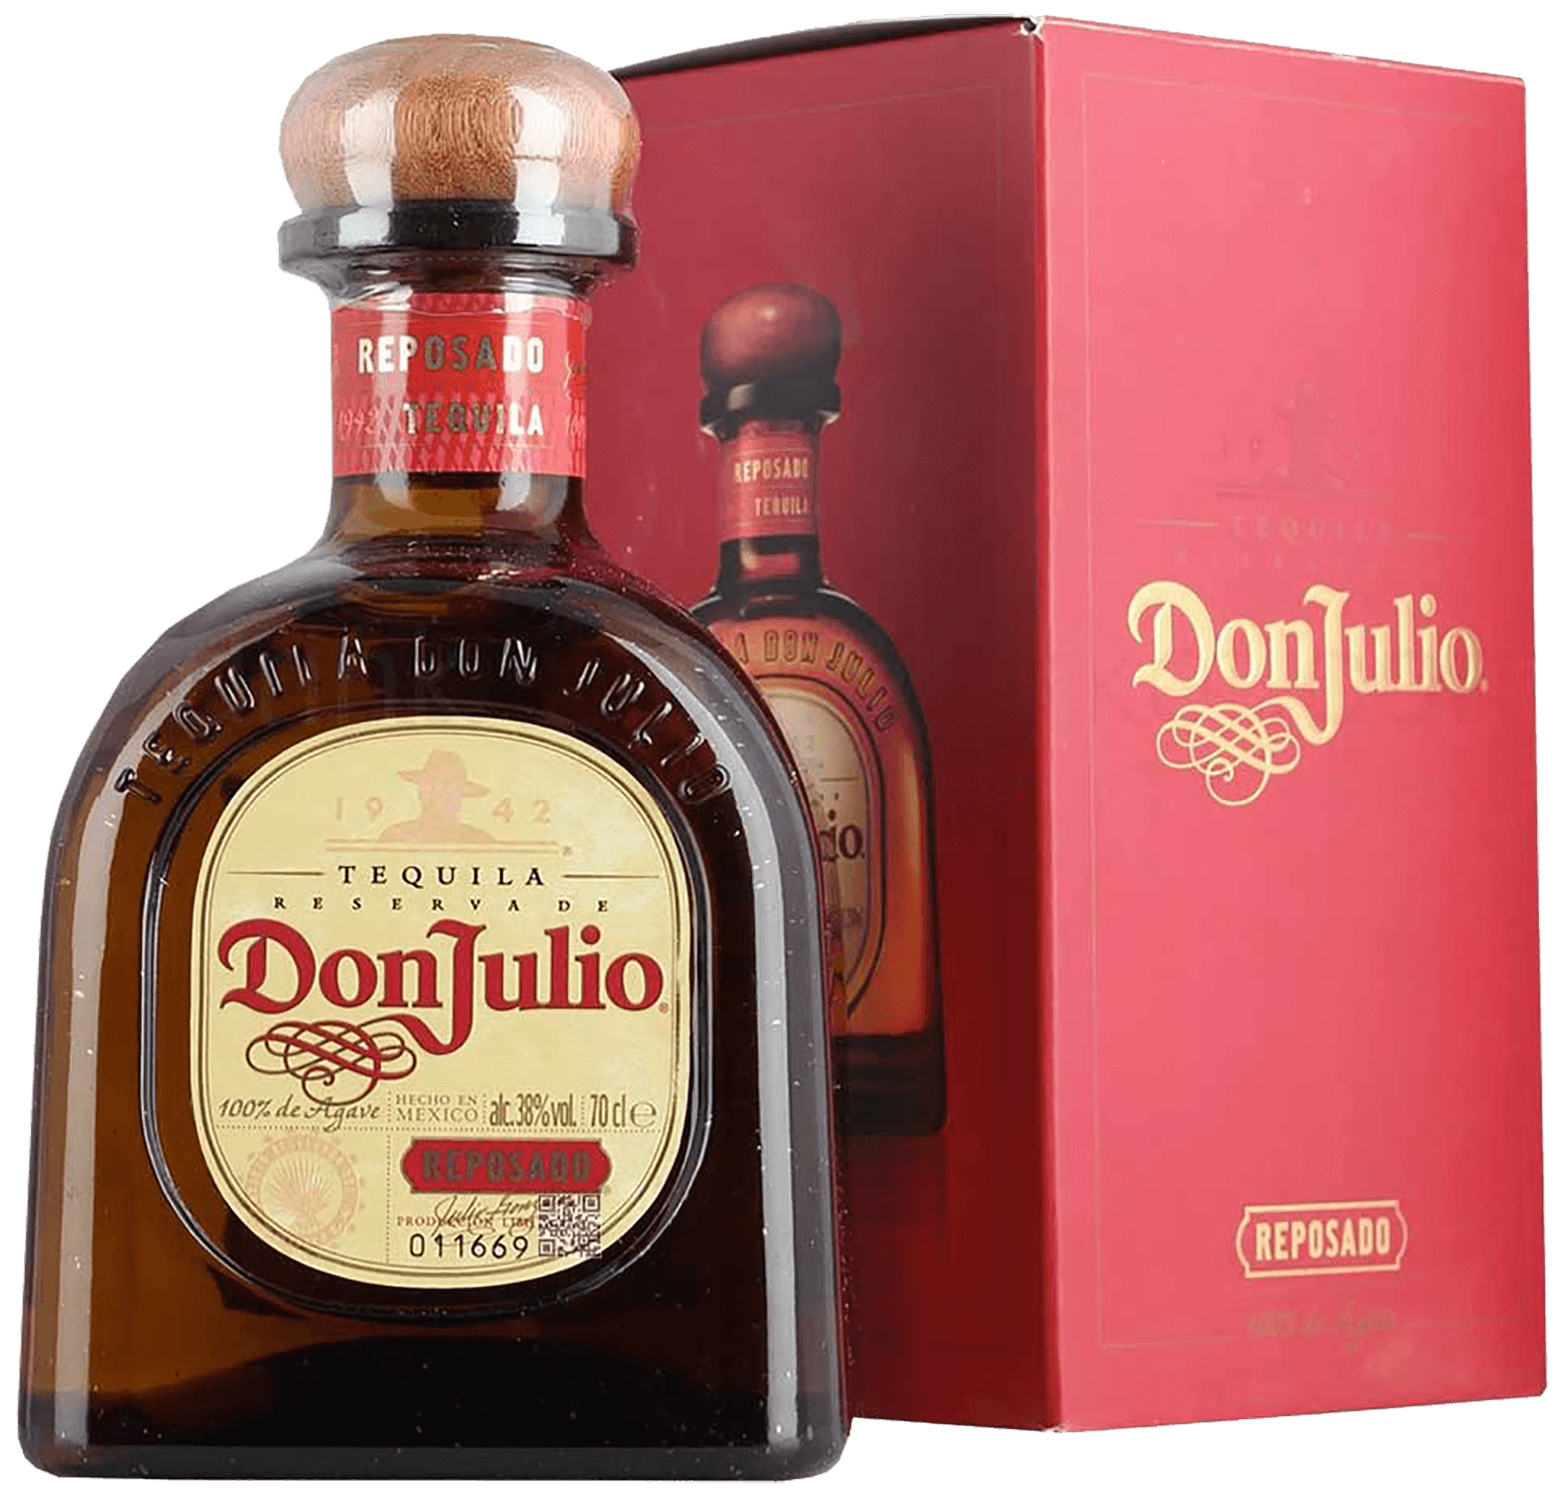 Don Julio Reposado (gift box) don chicho añejo tequila gift box